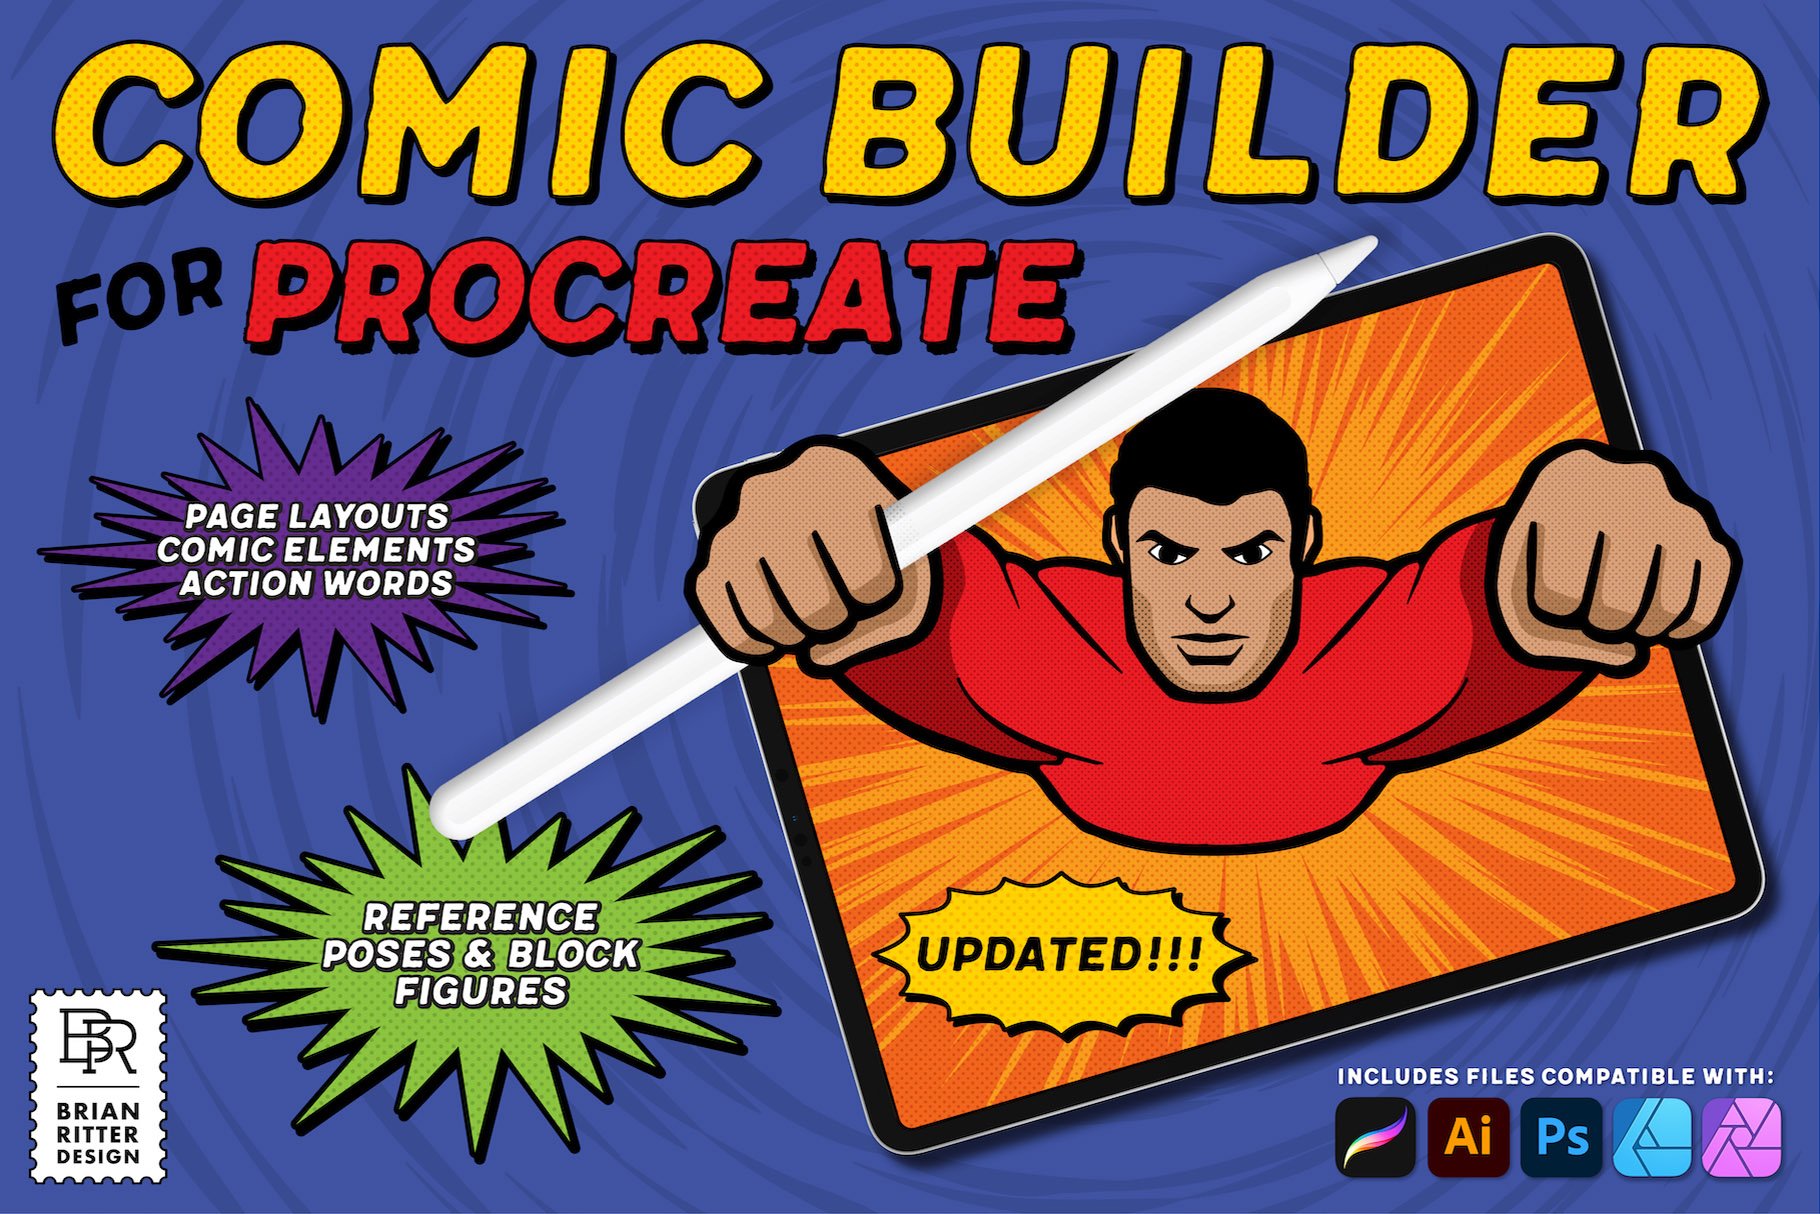 Comic Builder For Procreatecover image.